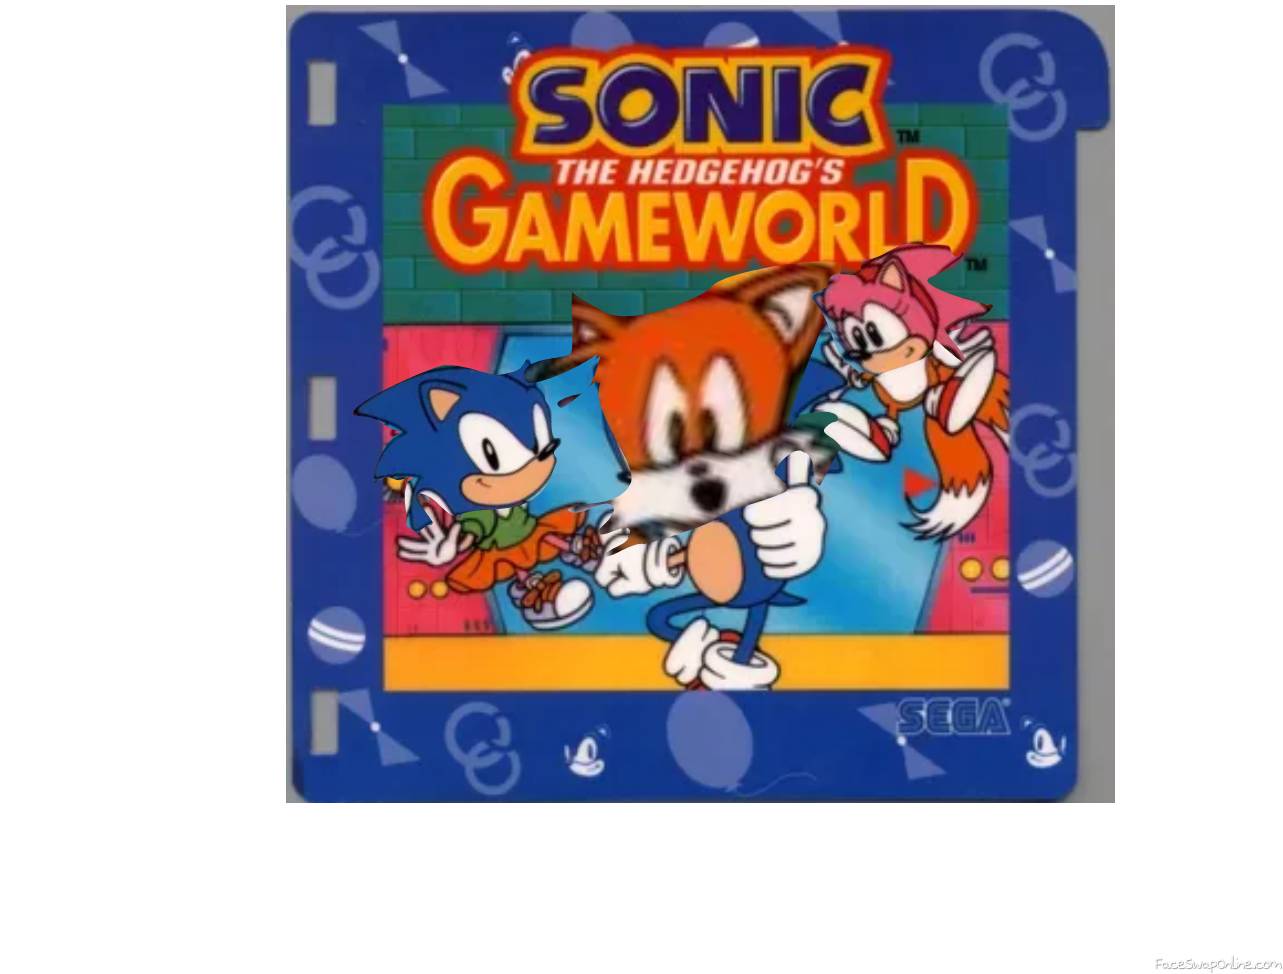 Sonic The Hedgehog Game World